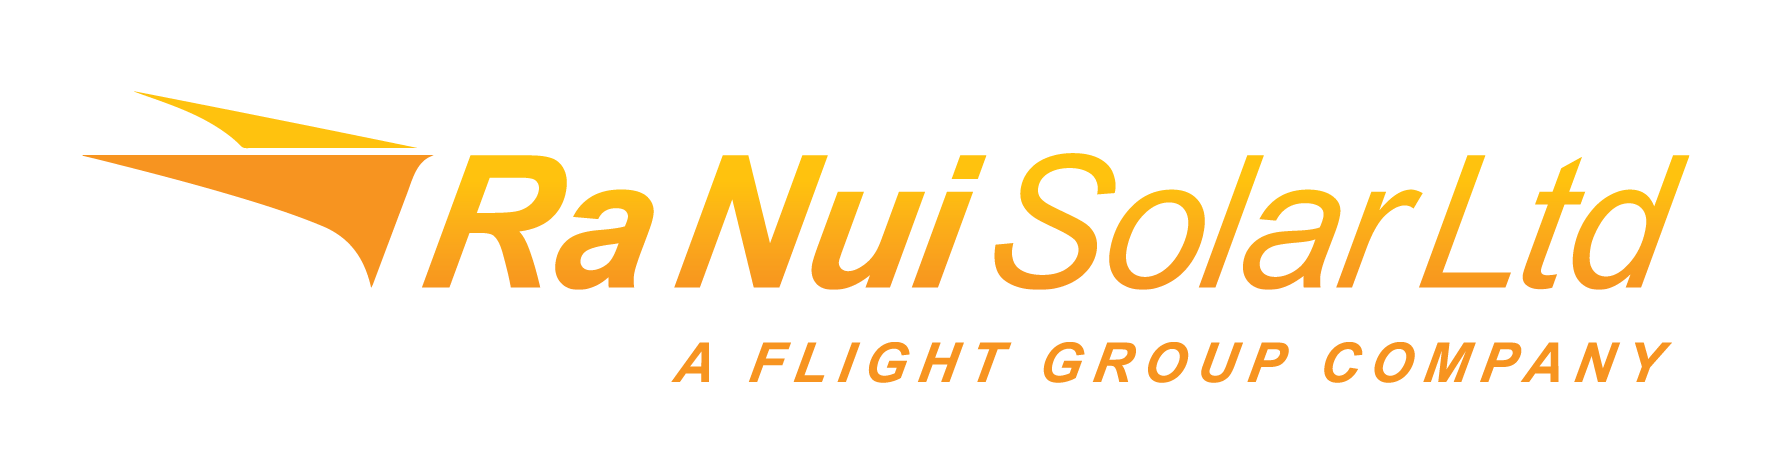 Ra Nui Solar Ltd logo for Flight Group